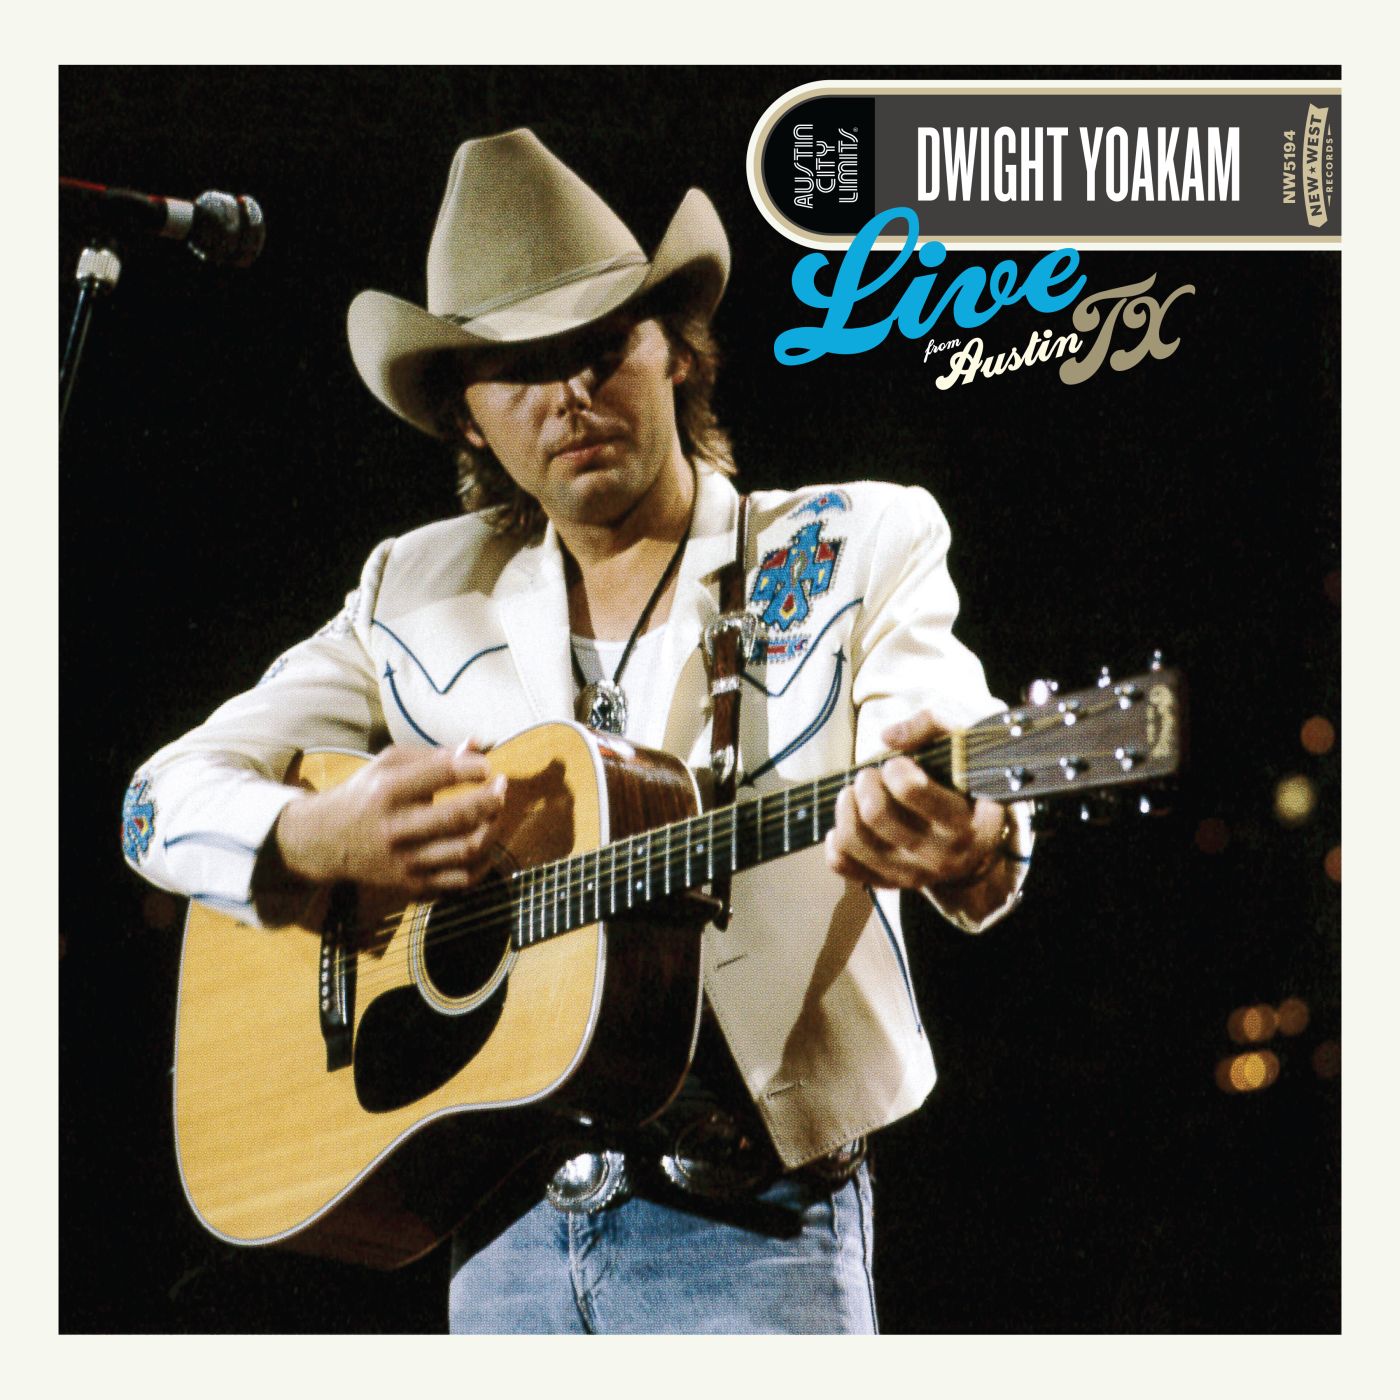 DWIGHT YOAKAM - LIVE FROM AUSTIN TX Vinyl LP